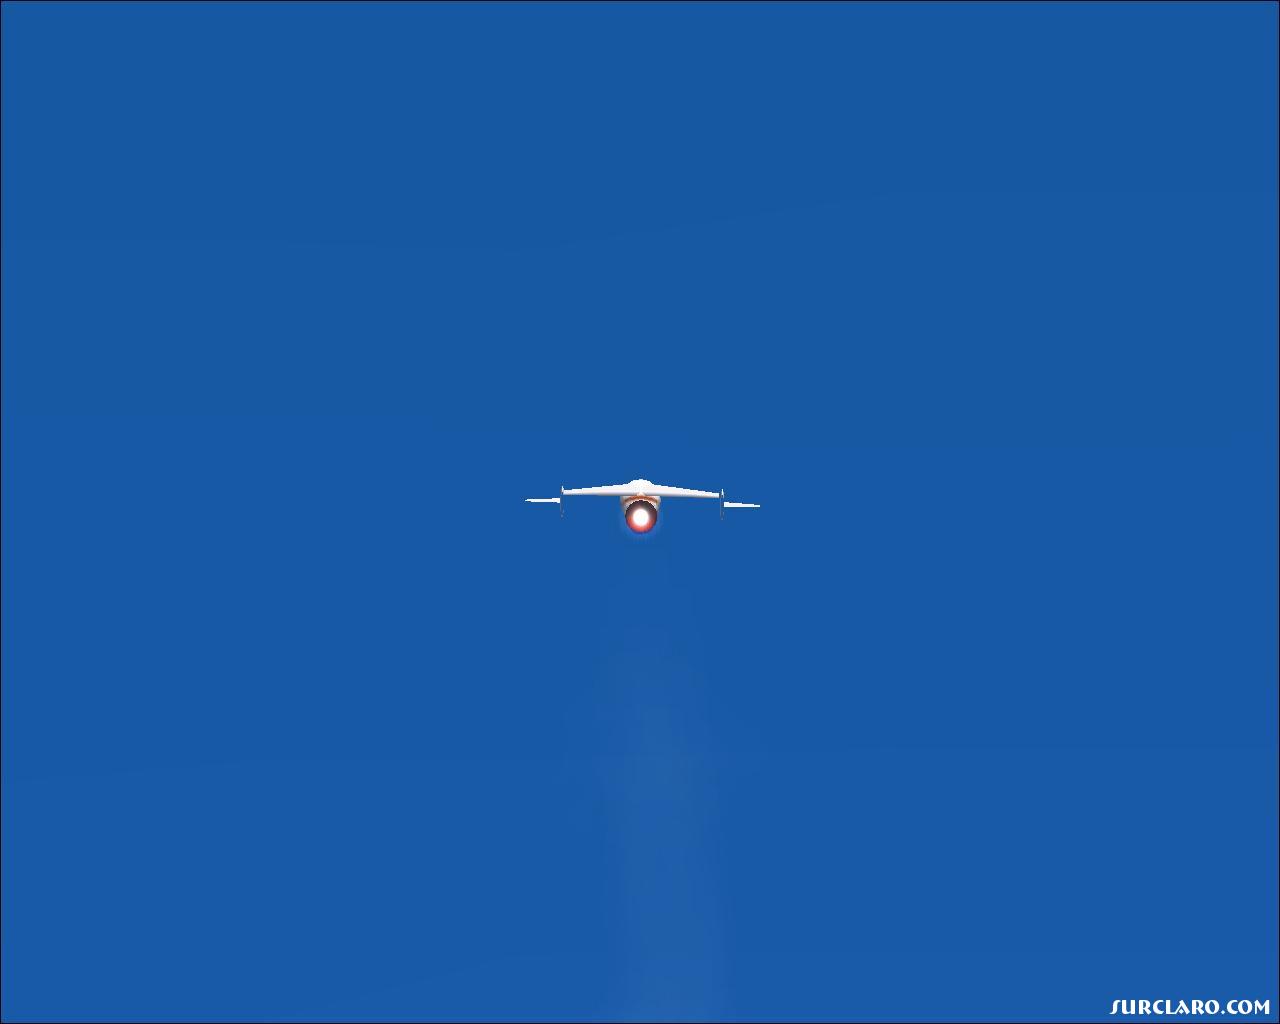 Spaceship one climbing at 2500 knots. - Photo 15718